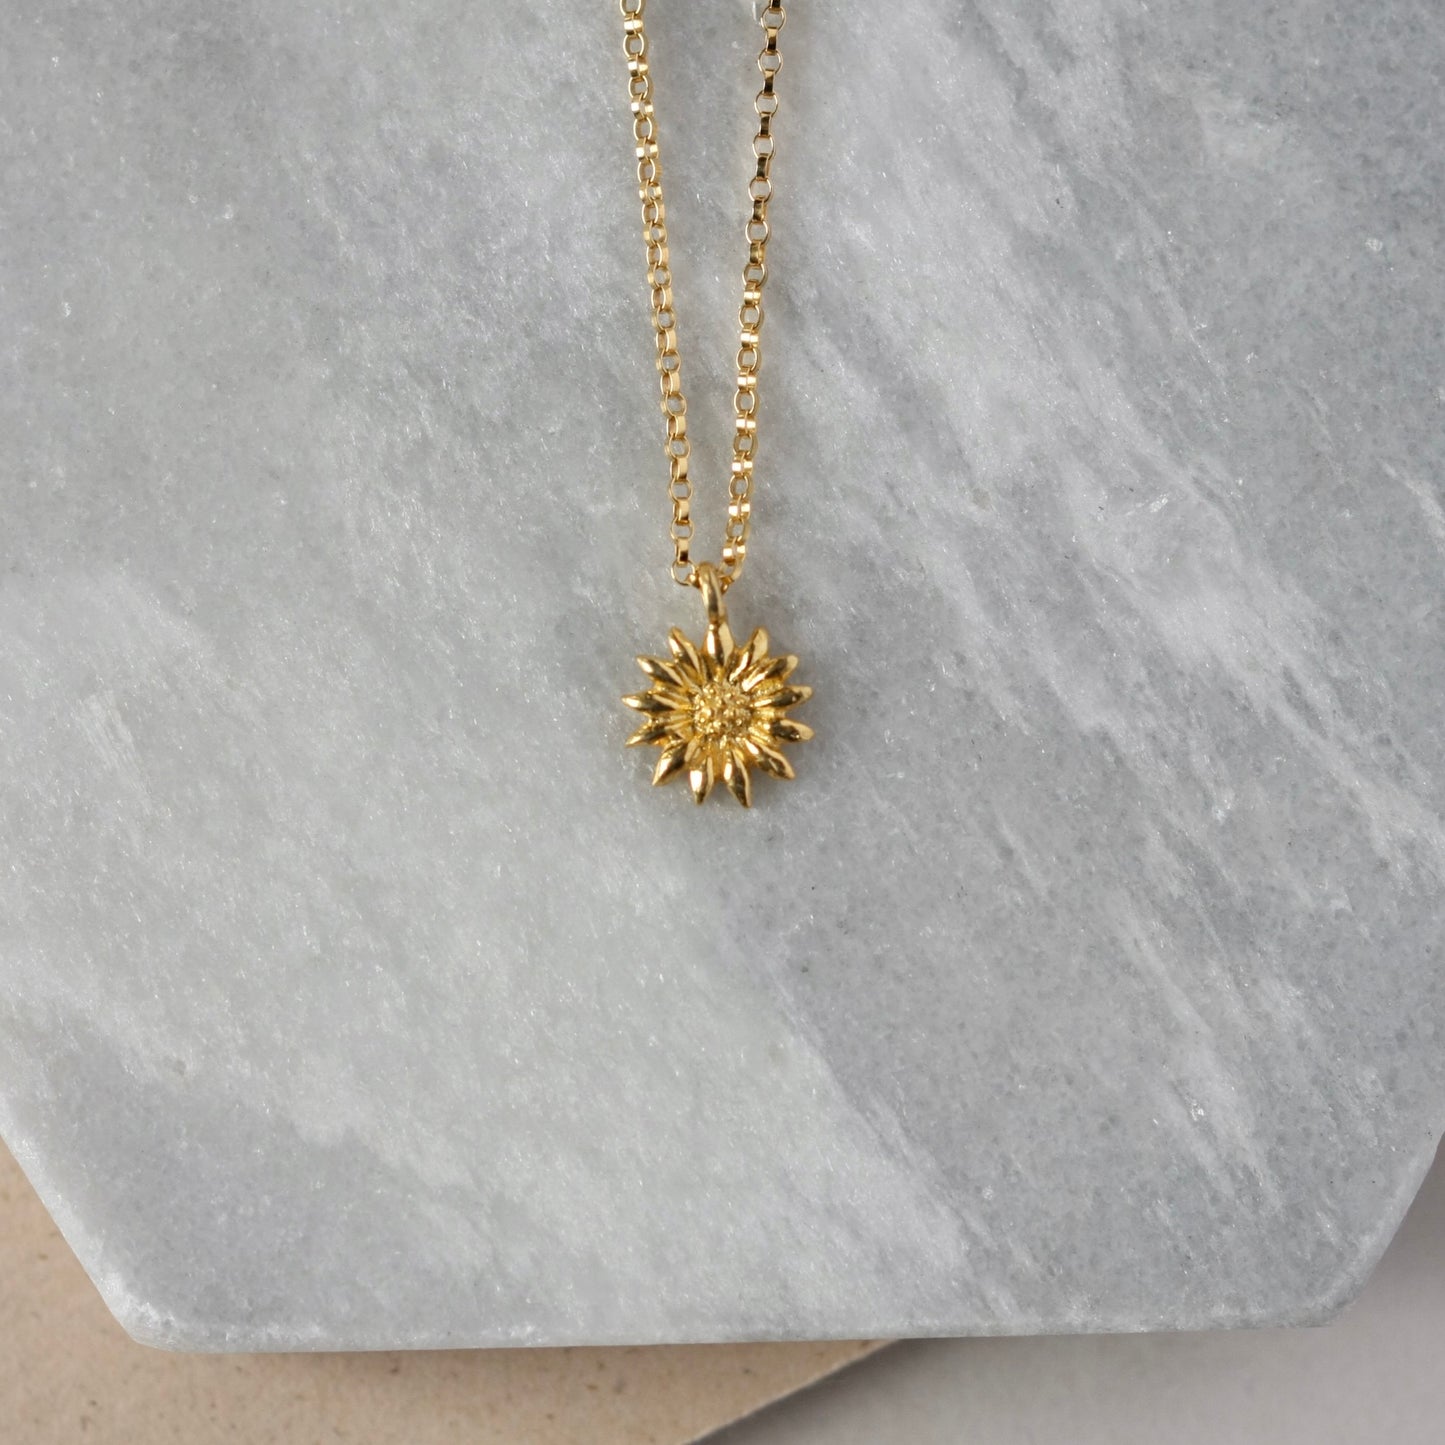 Minimalist Gold Flower Charm Necklace